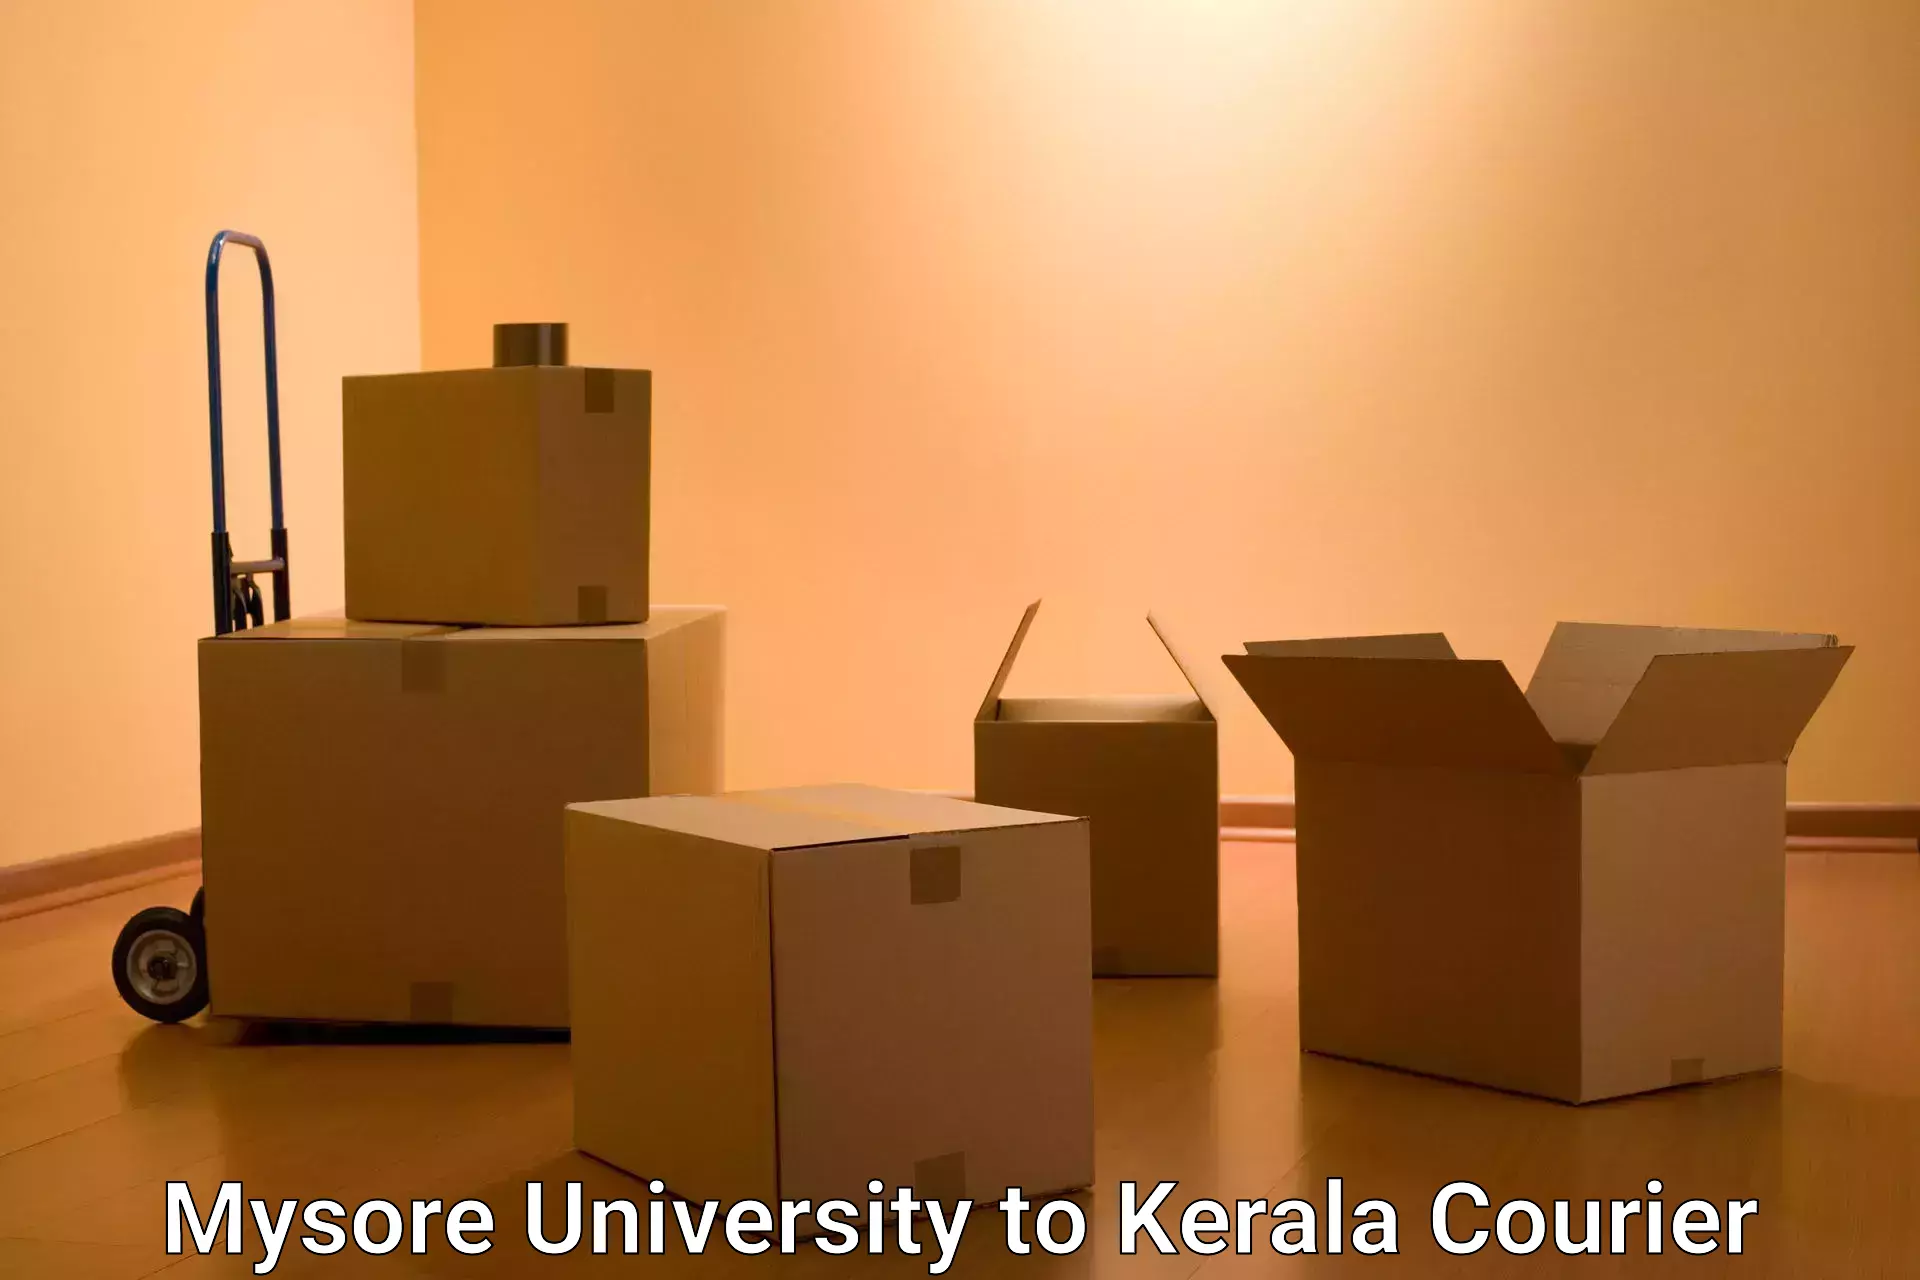 Courier service innovation Mysore University to Kuttikol